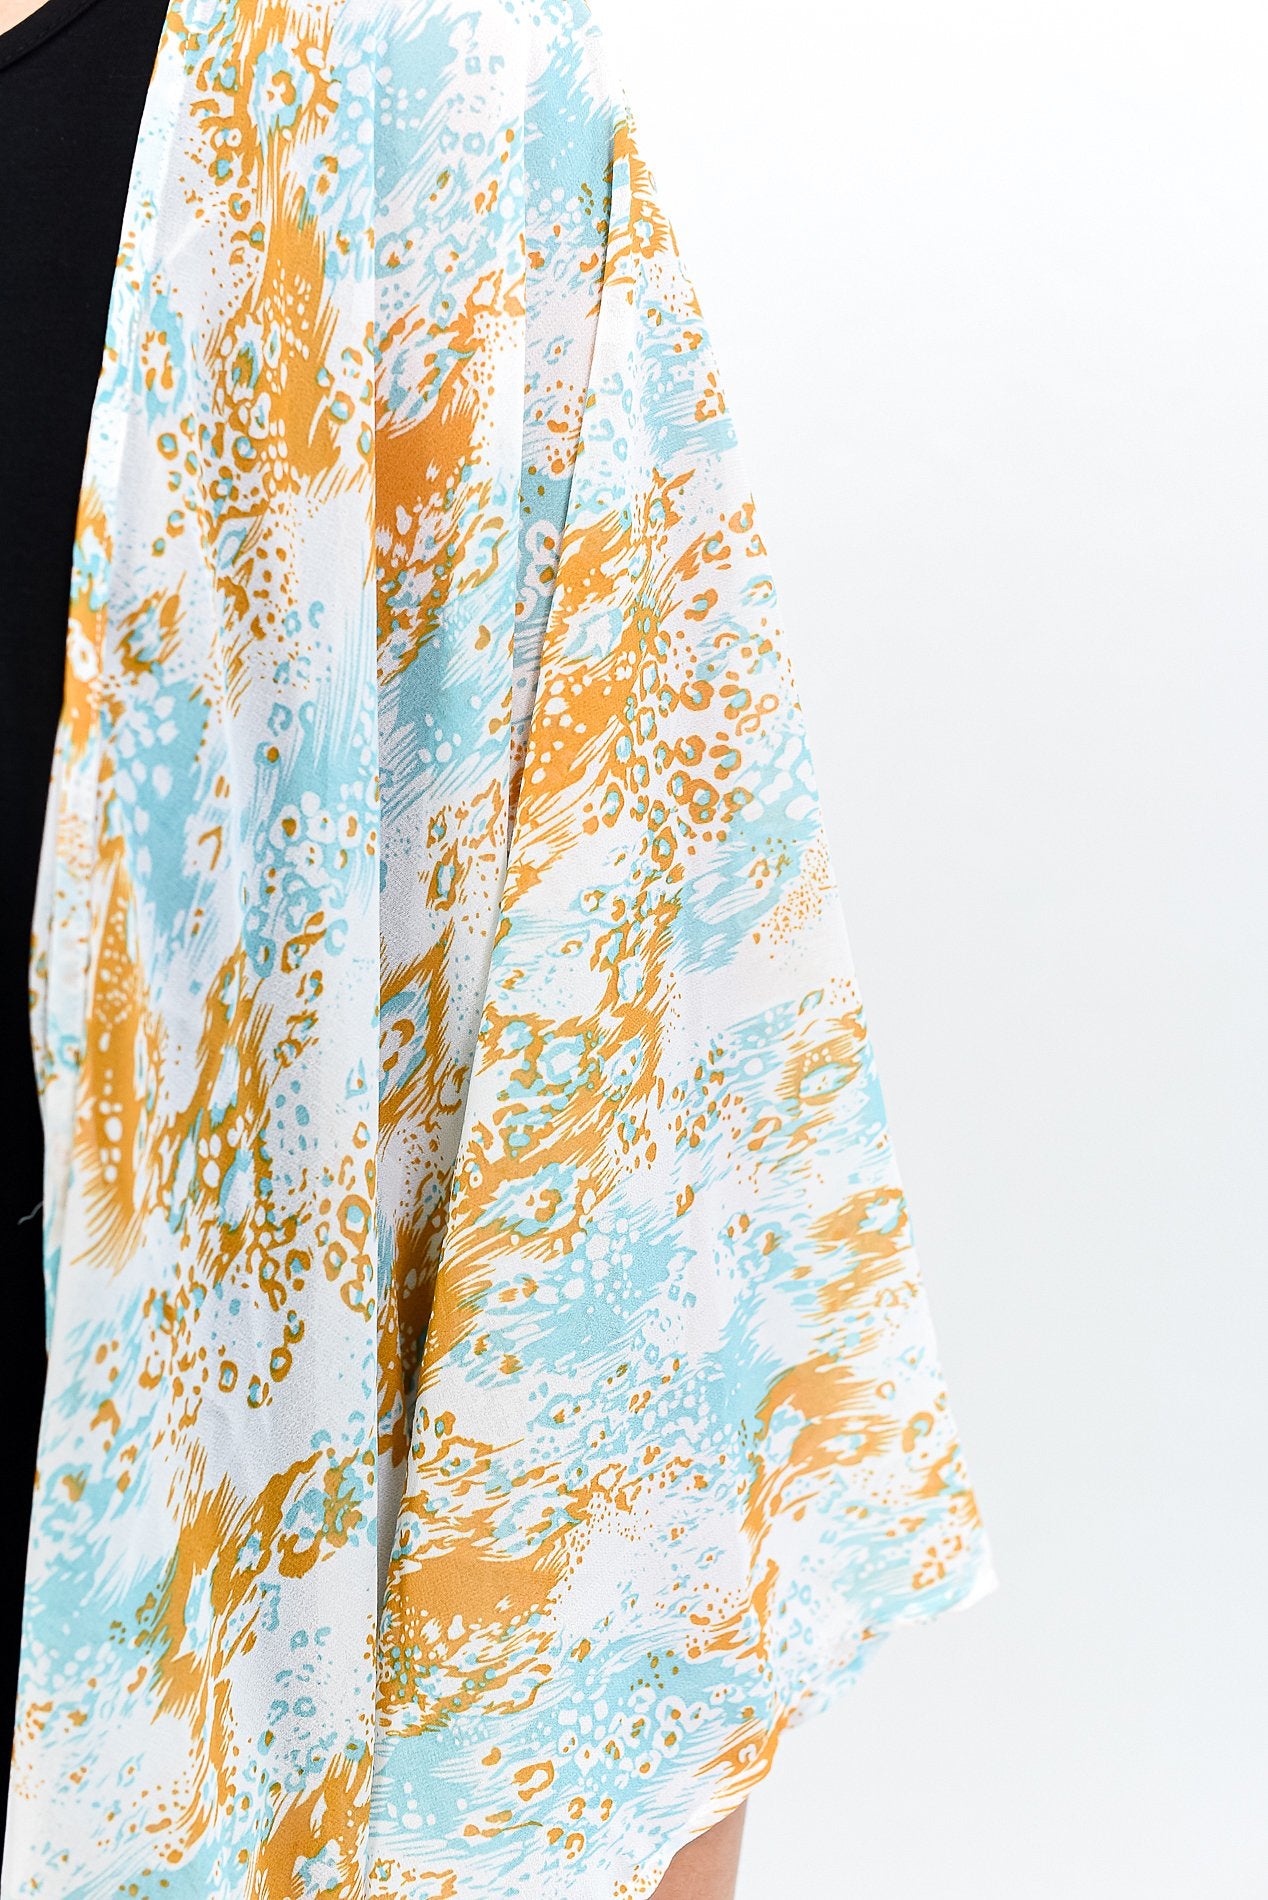 Triple Threat Diva Aqua/Ivory/Mustard Printed Kimono - O3168AQ